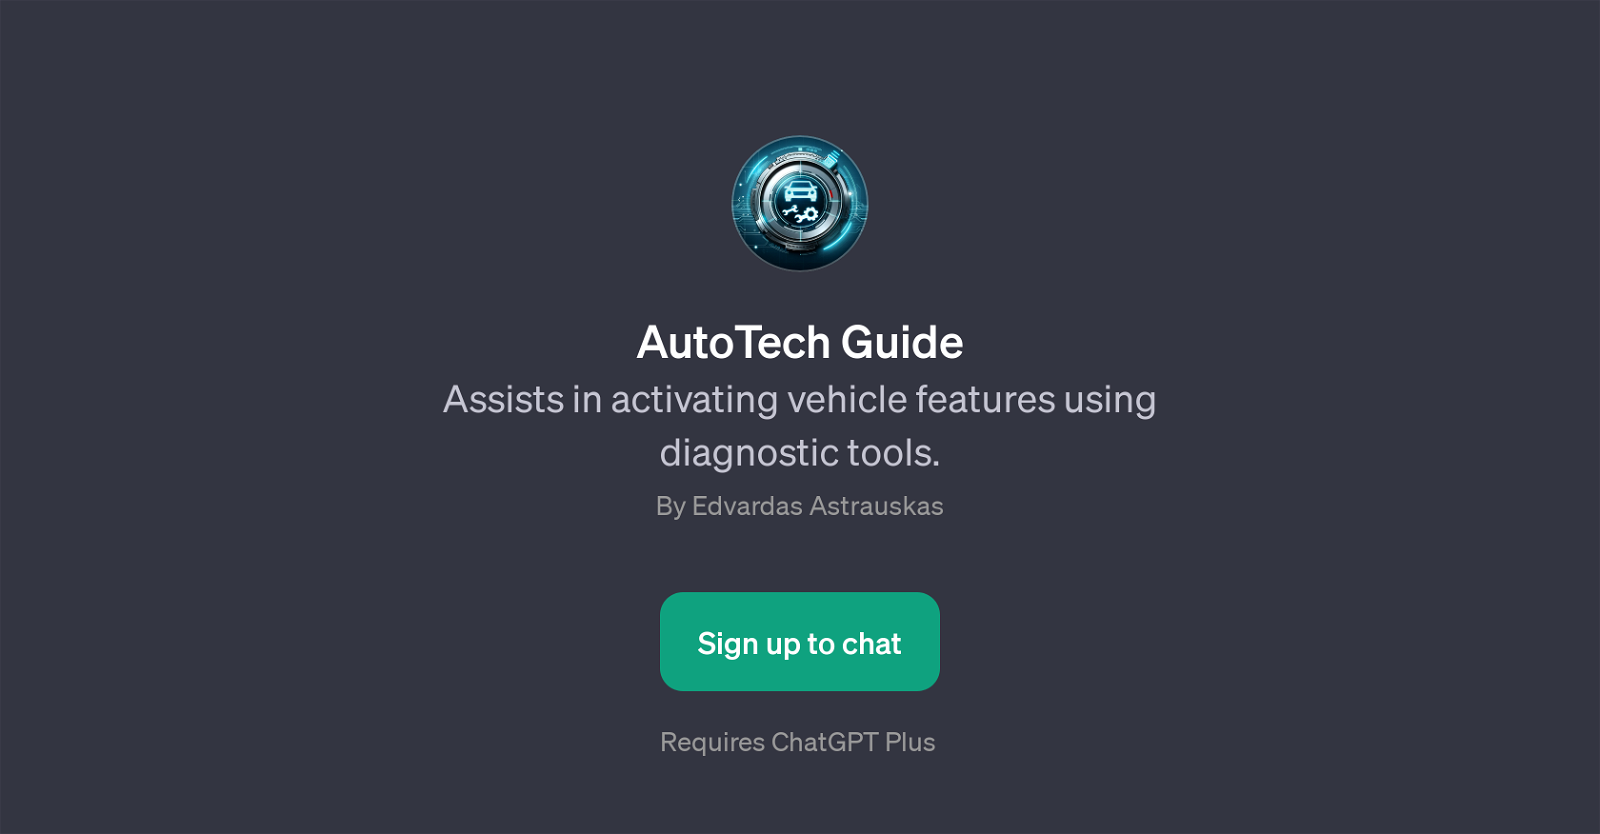 AutoTech Guide website